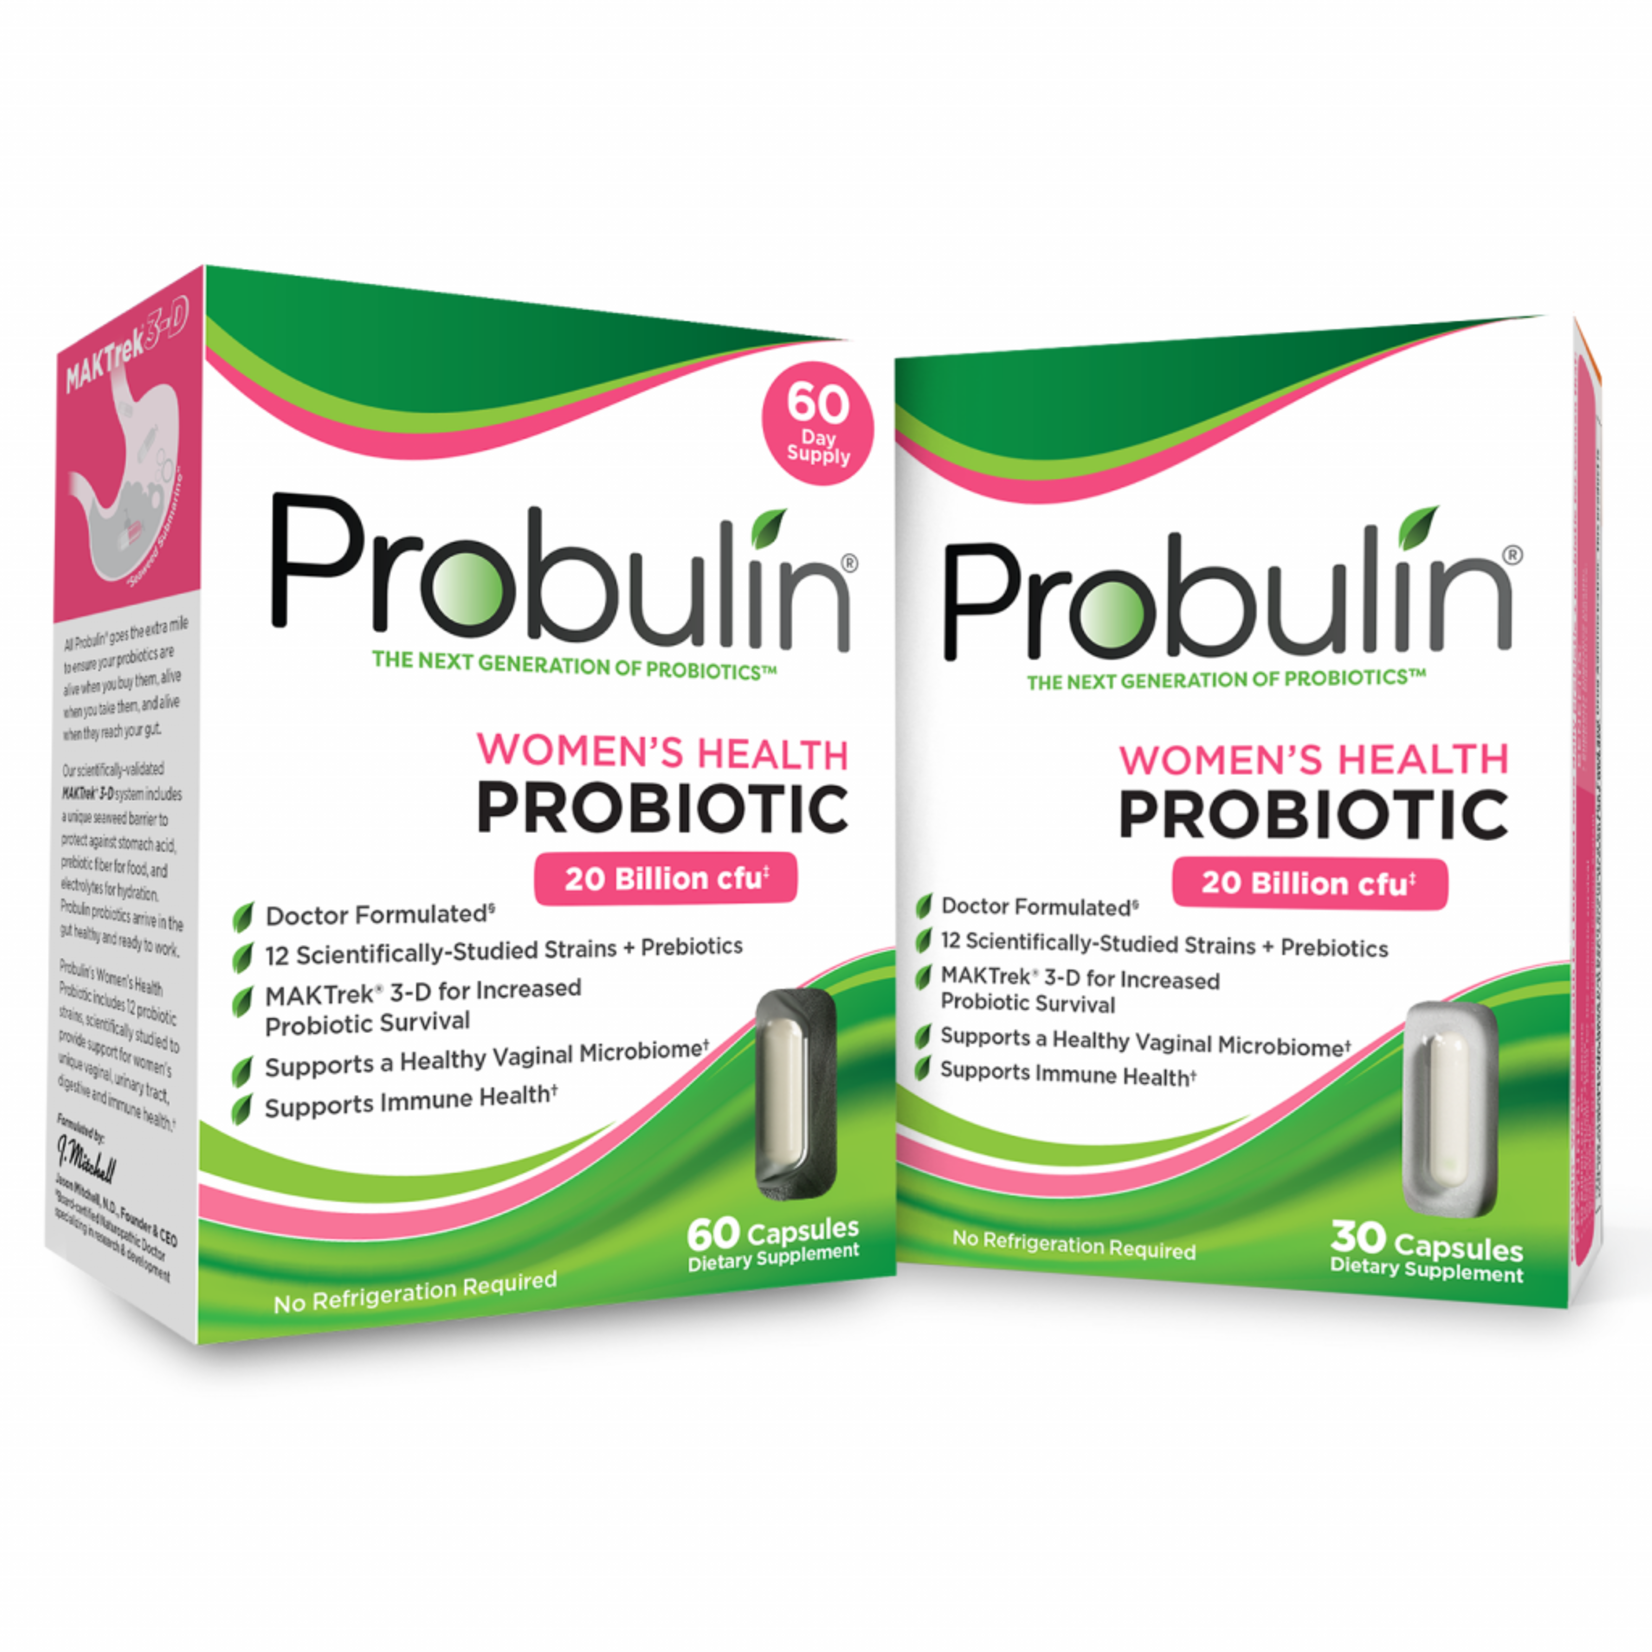 Probulin Probulin - Women's Health Probiotic - 60 Capsules